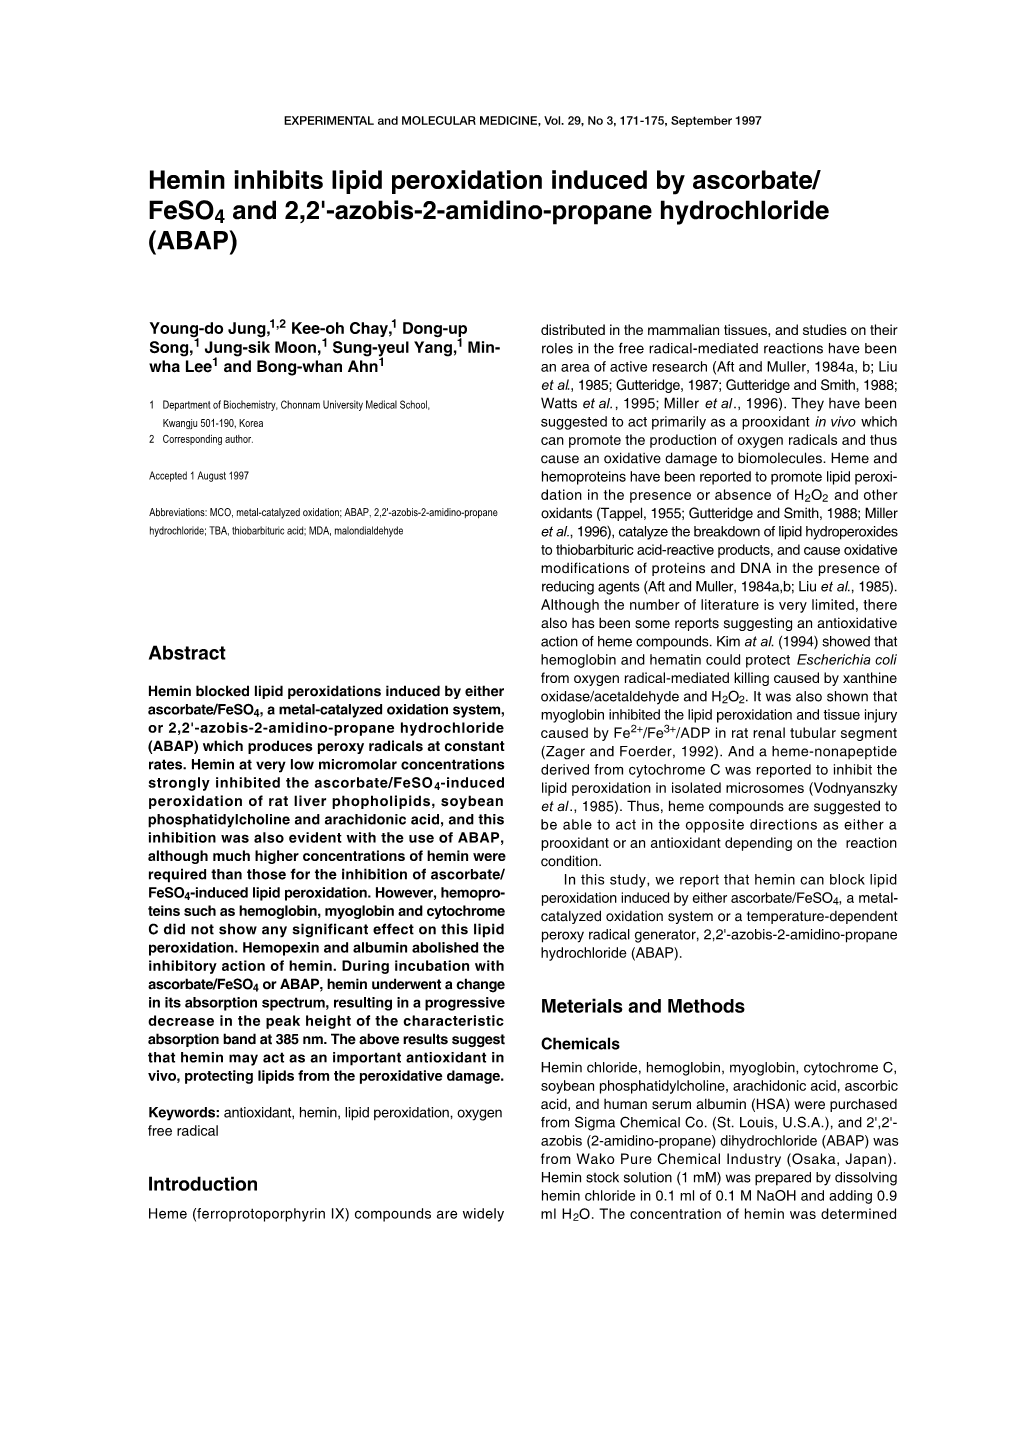 Hemin Inhibits Lipid Peroxidation Induced by Ascorbate/ Feso4 and 2,2'-Azobis-2-Amidino-Propane Hydrochloride (ABAP)